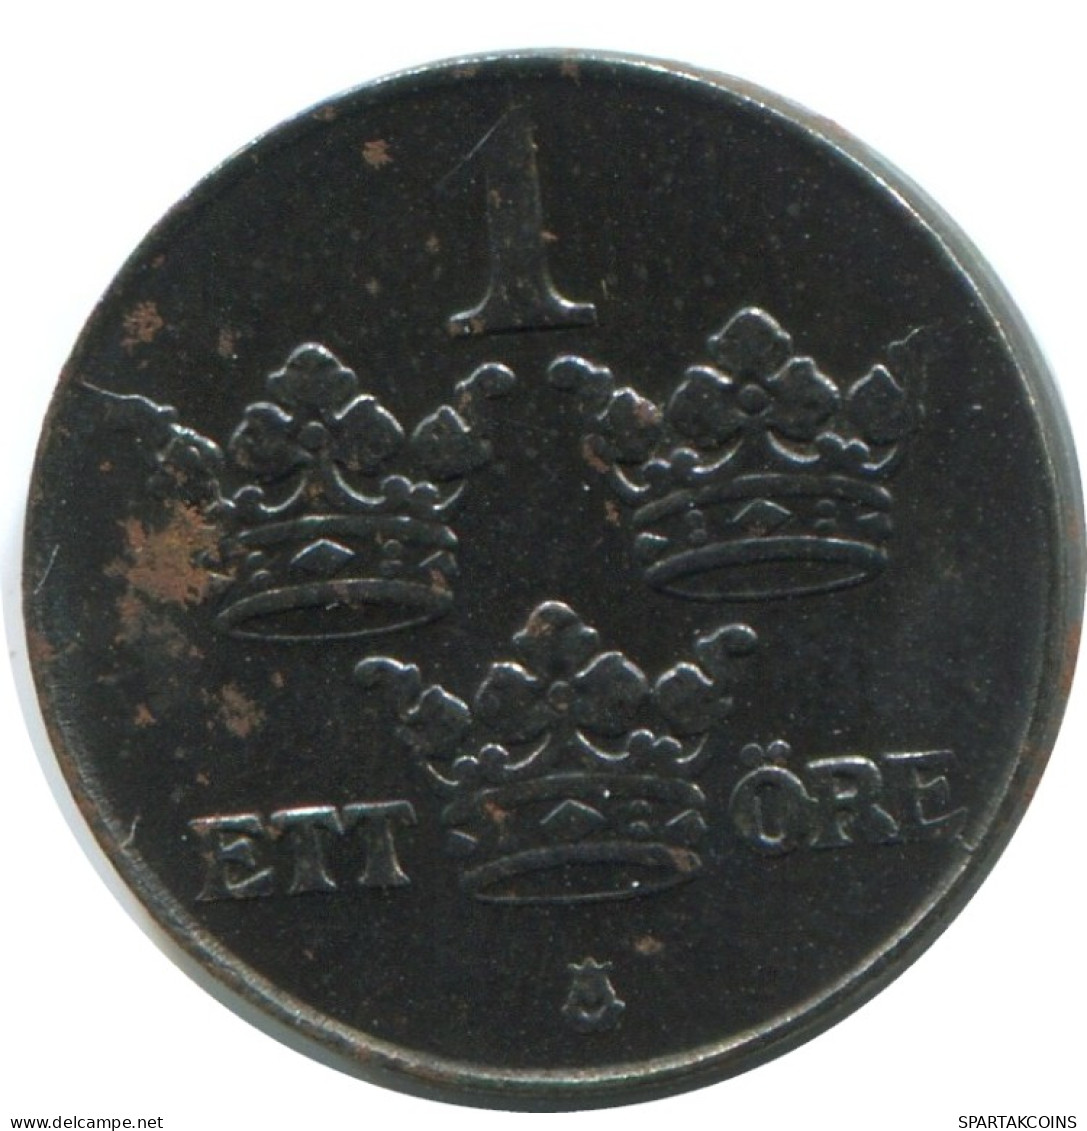 1 ORE 1948 SWEDEN Coin #AD252.2.U.A - Sweden